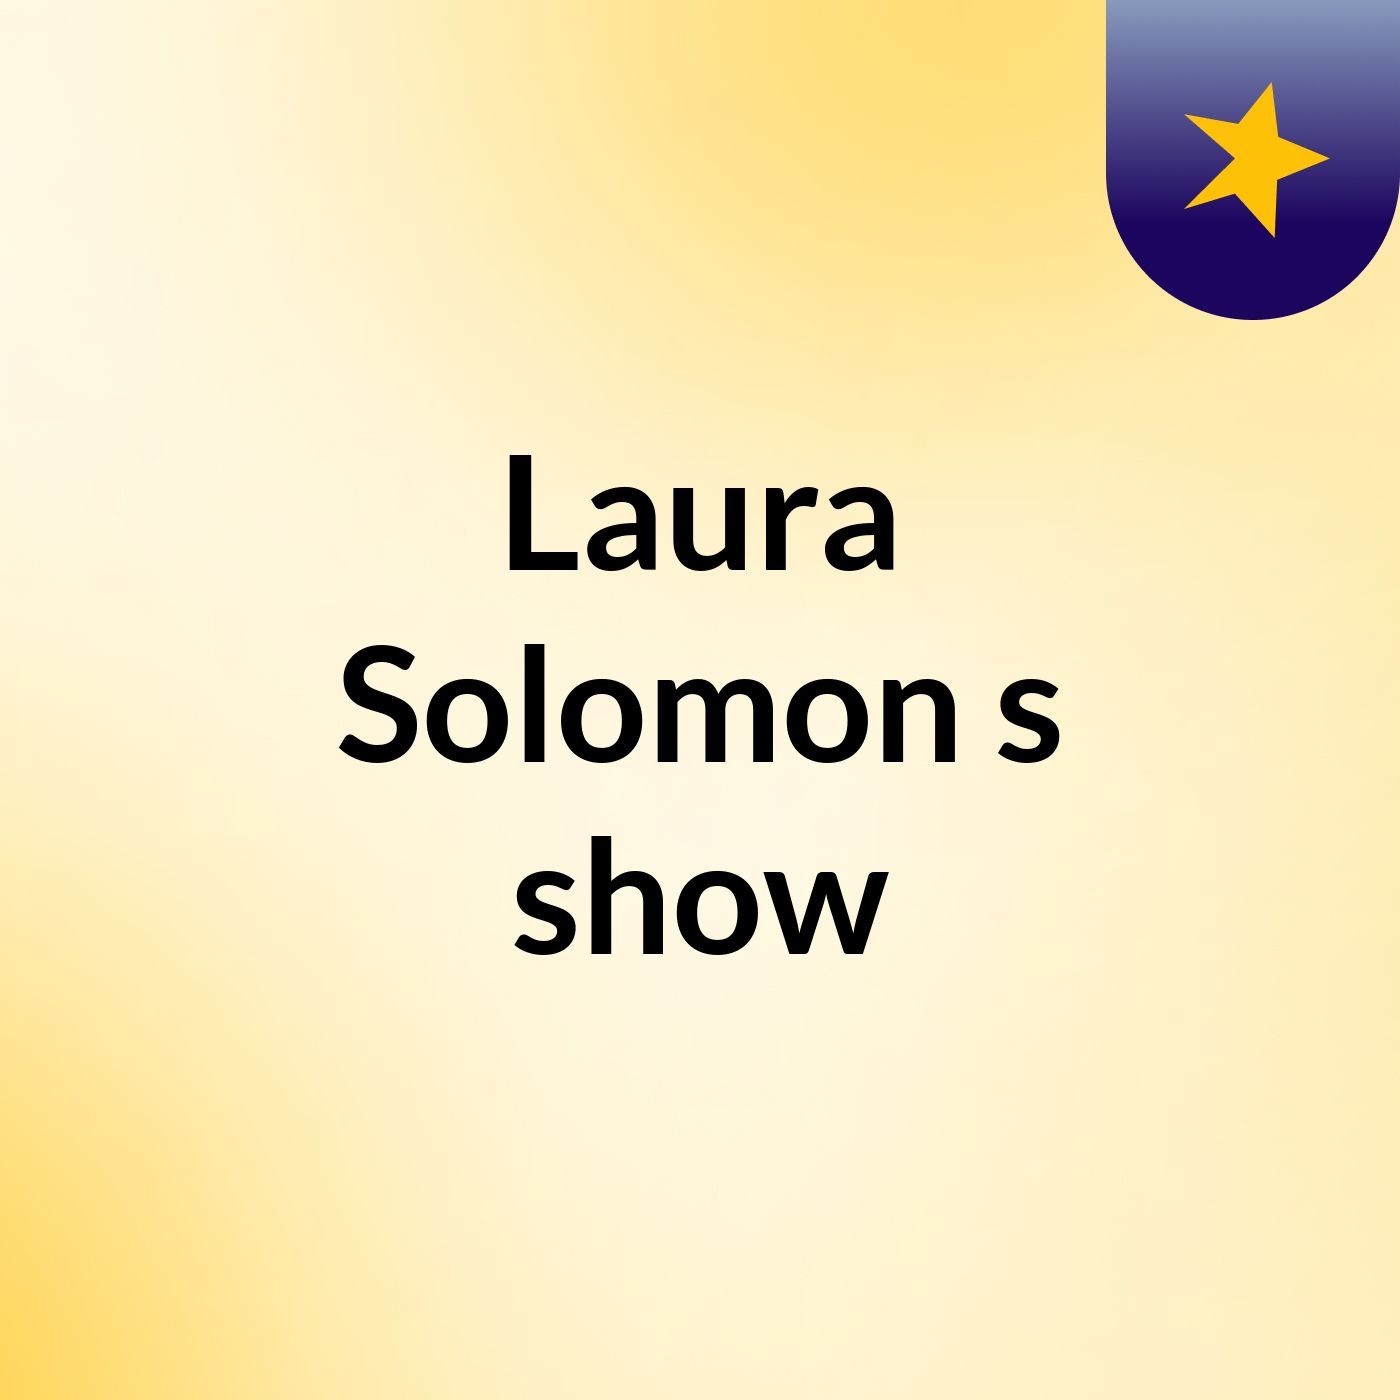 Laura Solomon's show